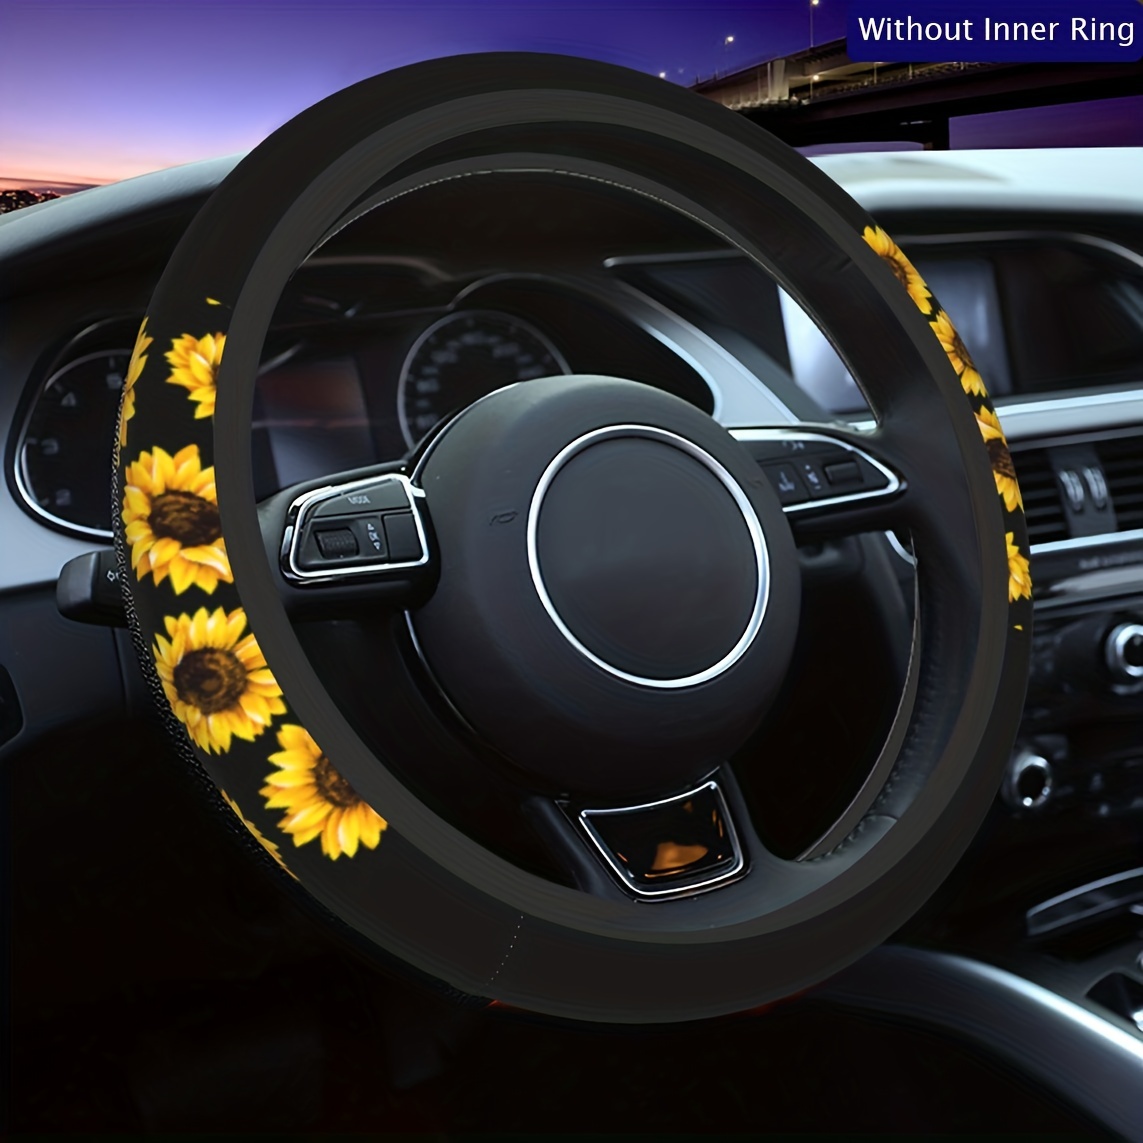 

Sunflower Car Steering Wheel Cover - Universal 15 Inch Anti-slip Car Steering Wheel Protector Cover, Car Interior Accessories Decoration